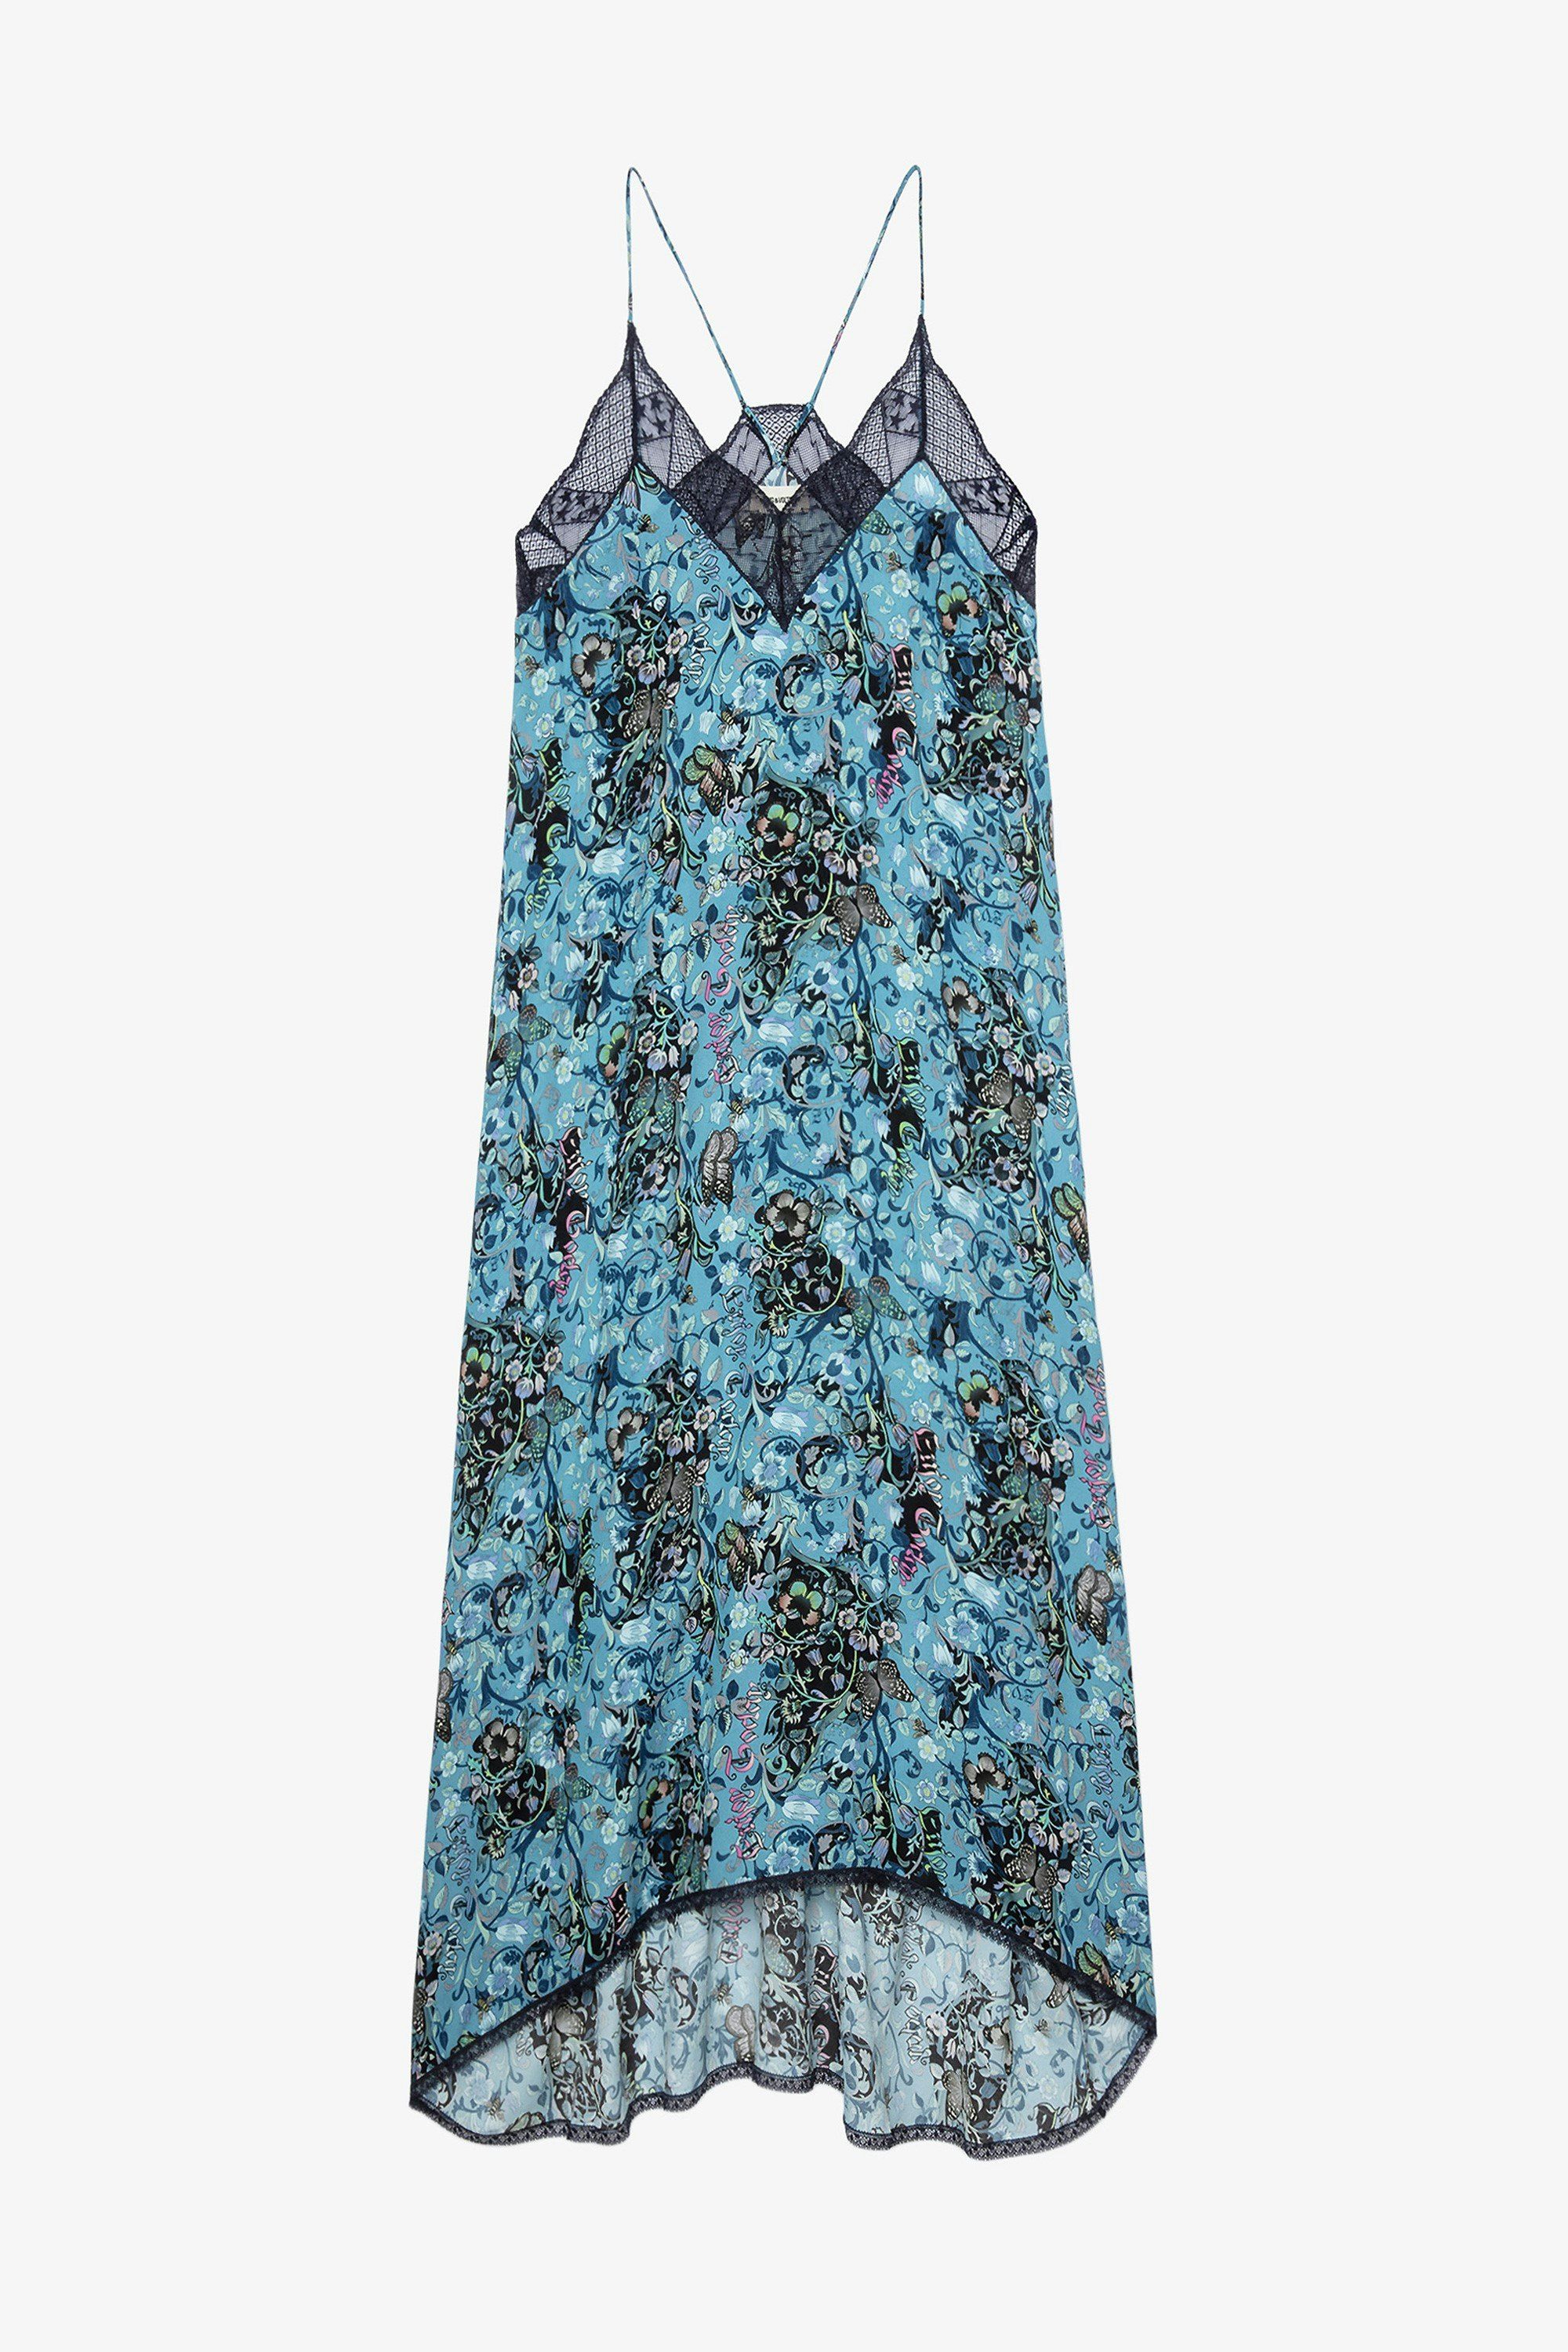 Risty Boho ドレス Women's blue floral dress 